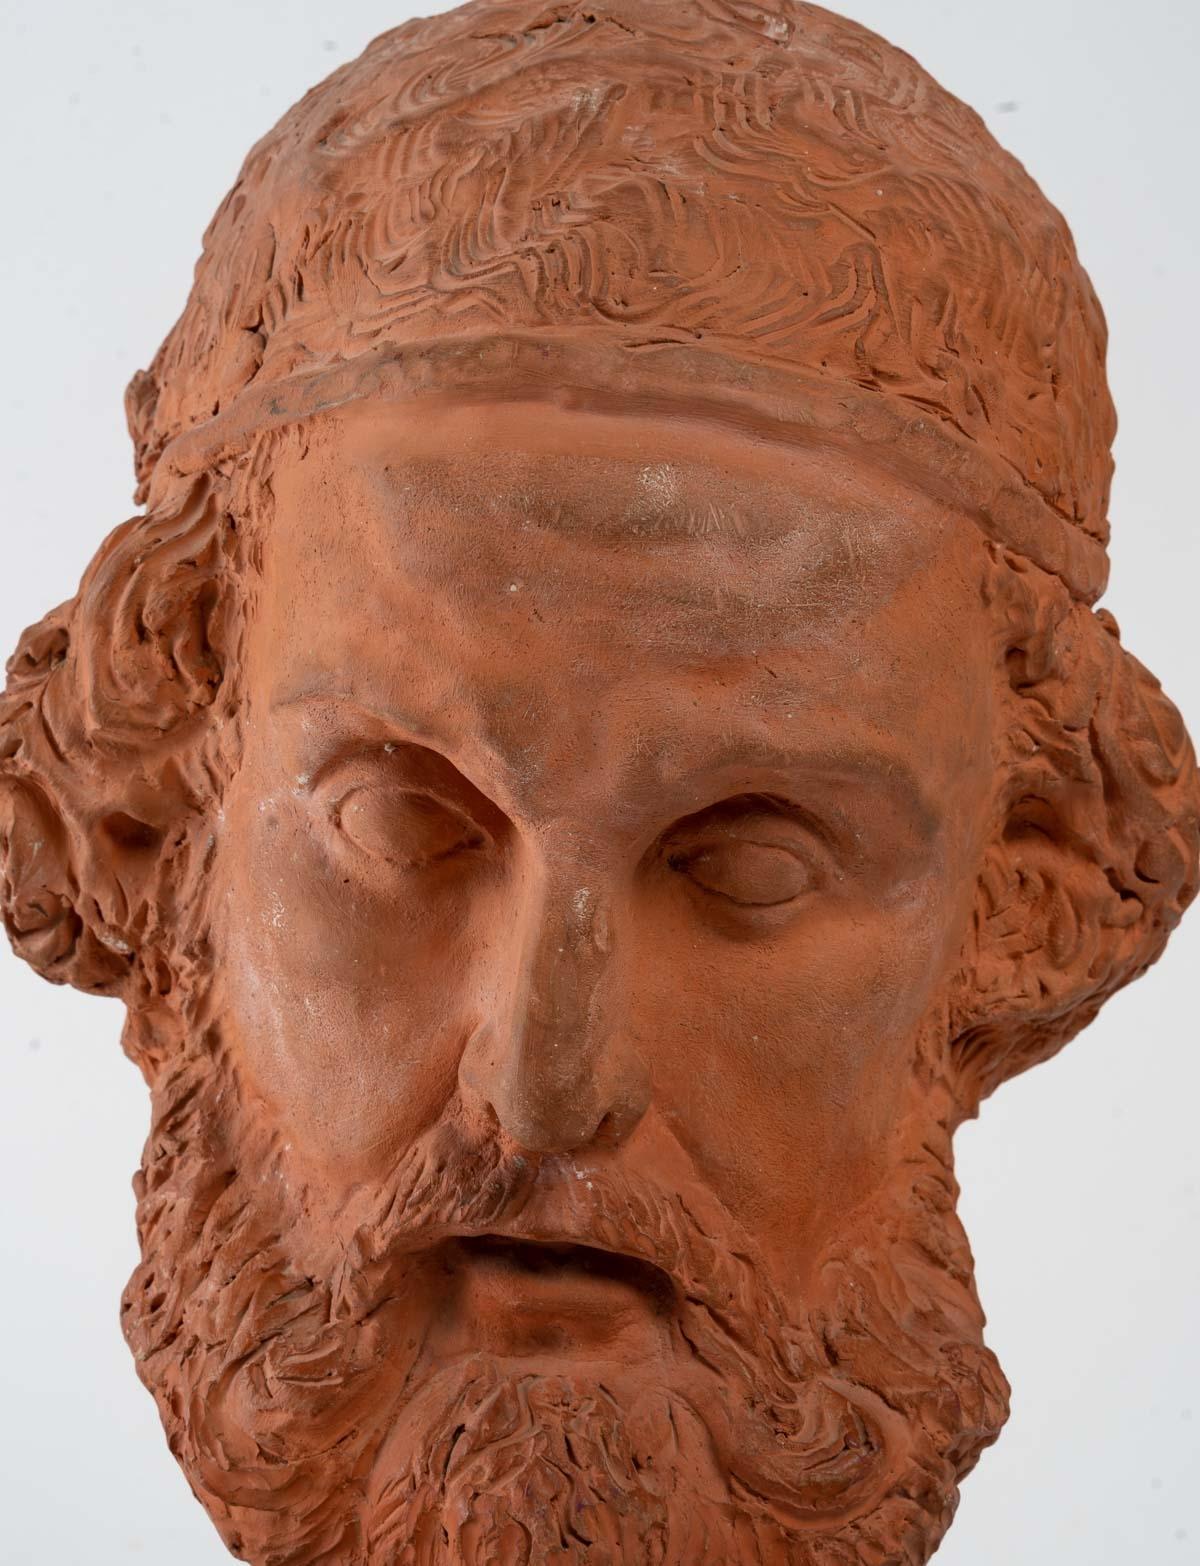 Original sculpture in terracotta. Herodotus. 20th century represents a man's head. France
Measure: H 38 cm.